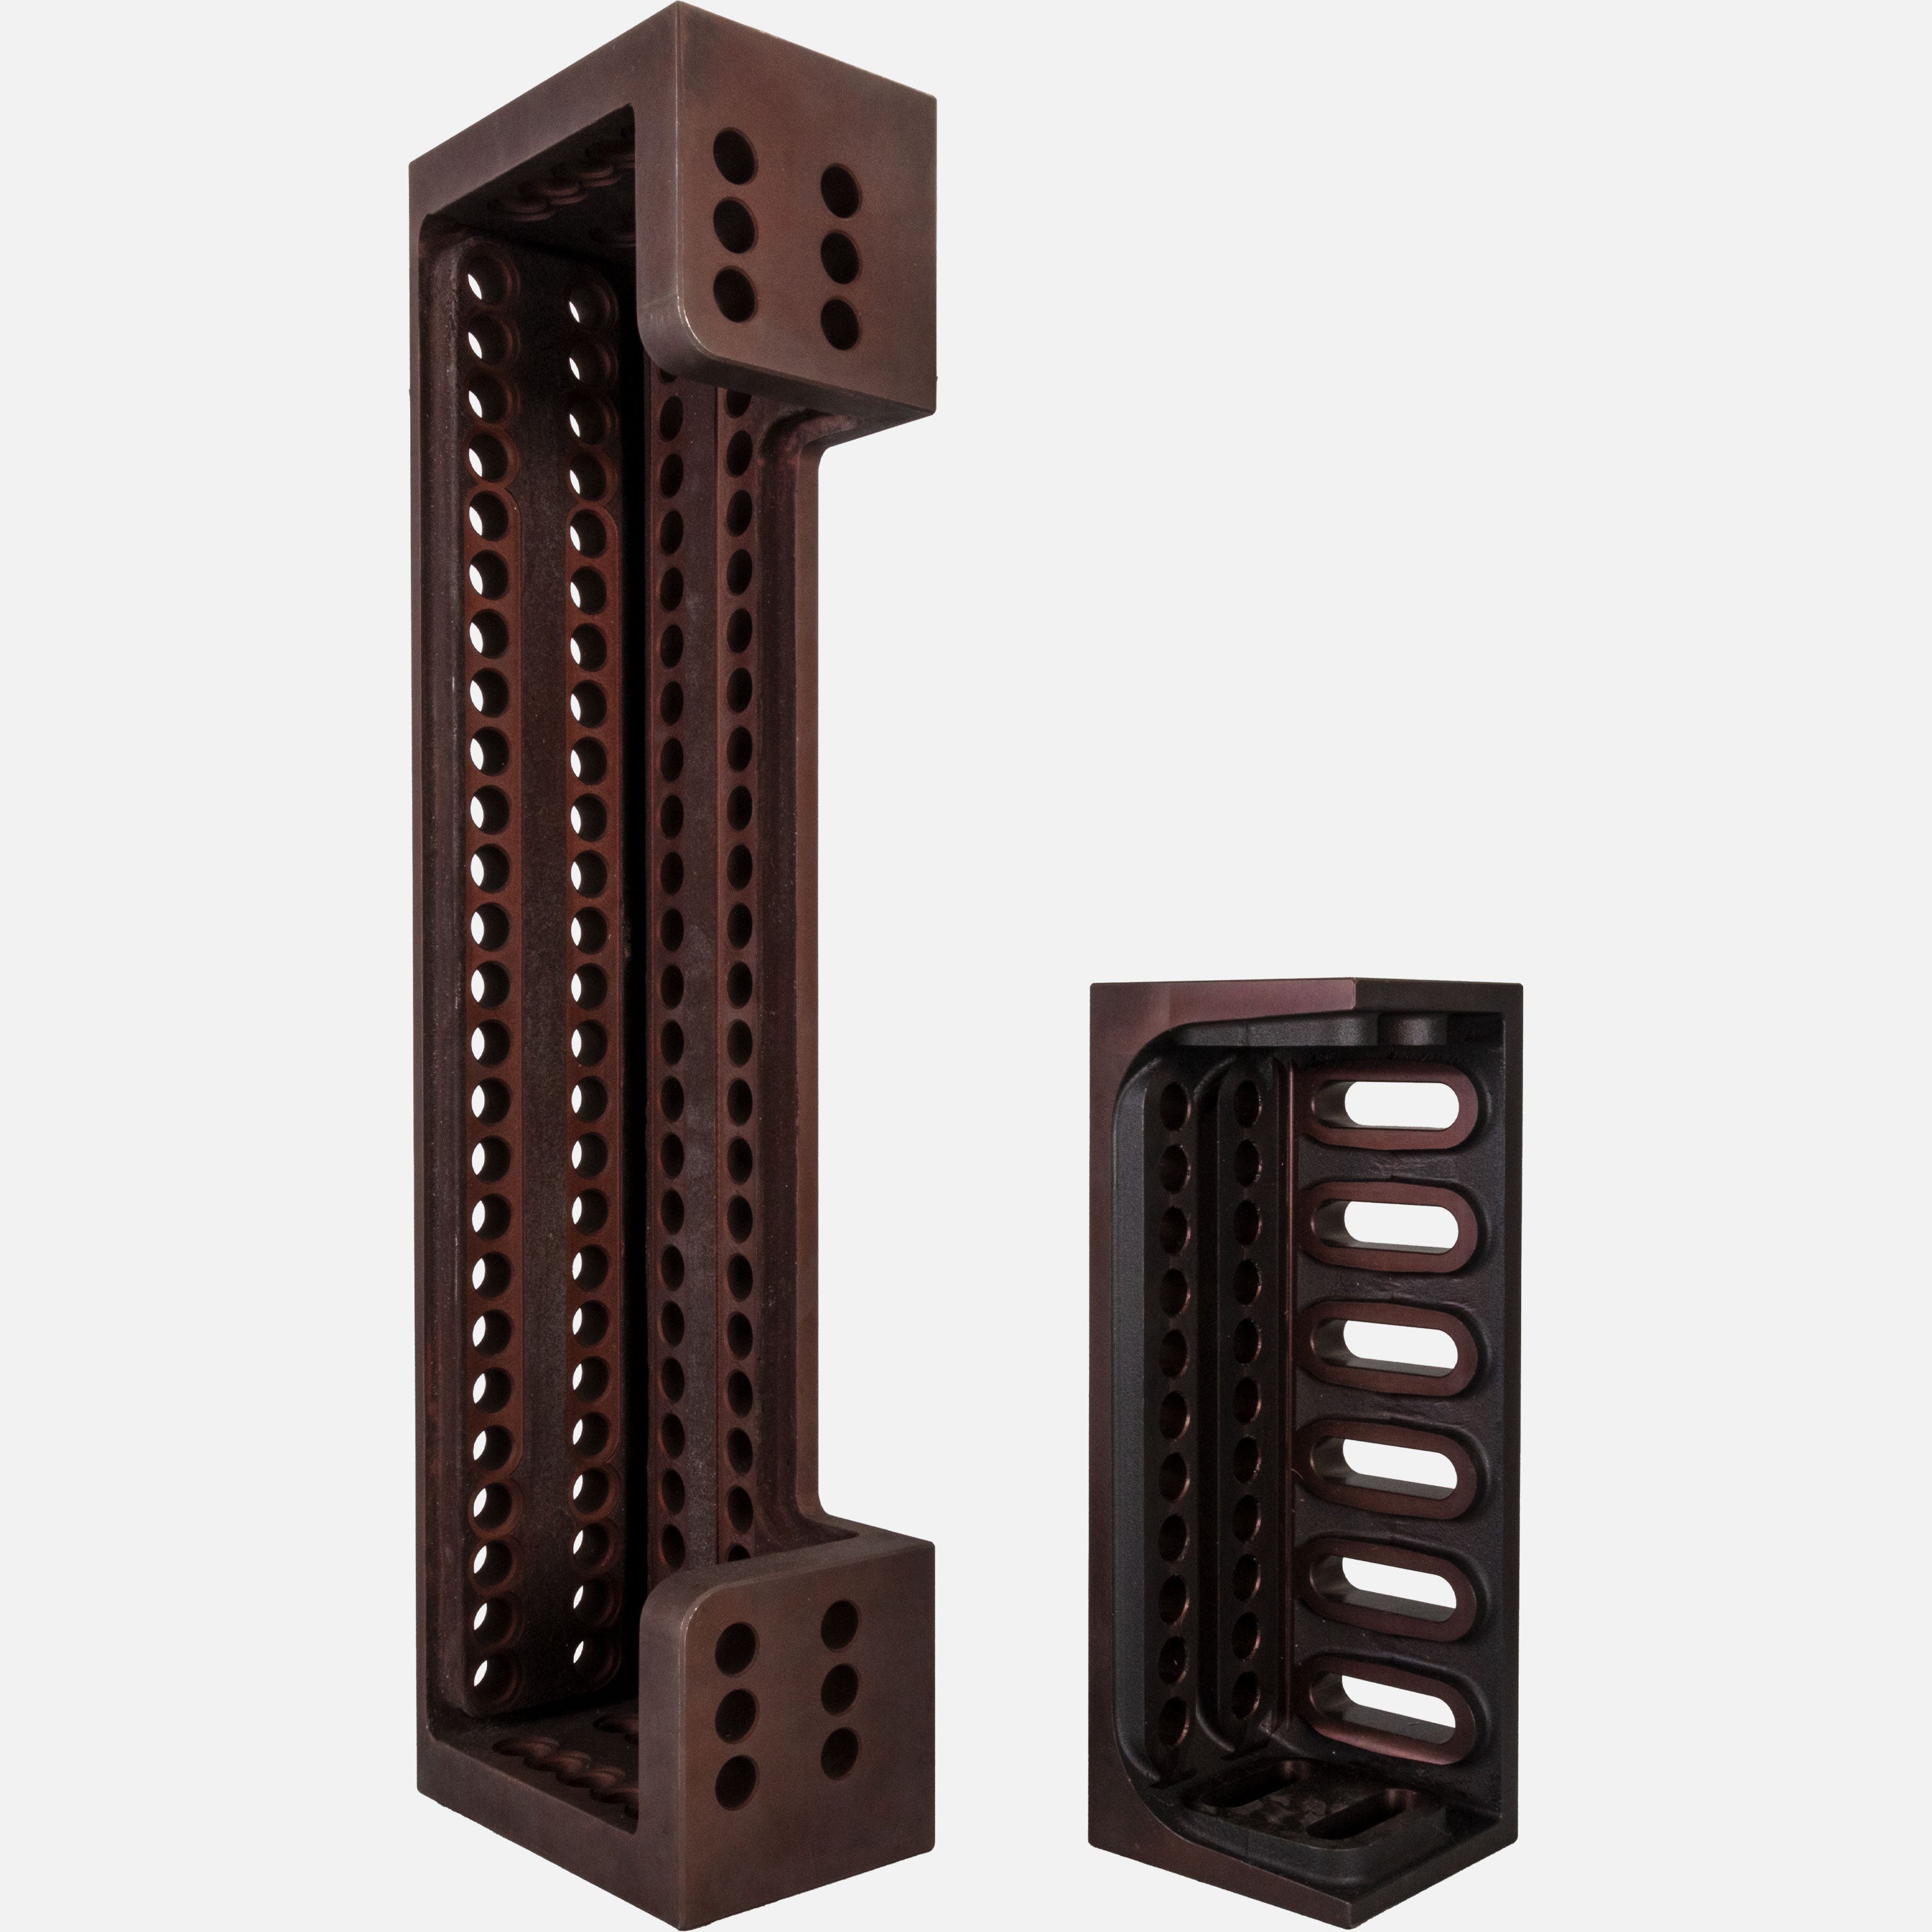 Cast Tower Block (28" x 5" x 8") [3/4" System]